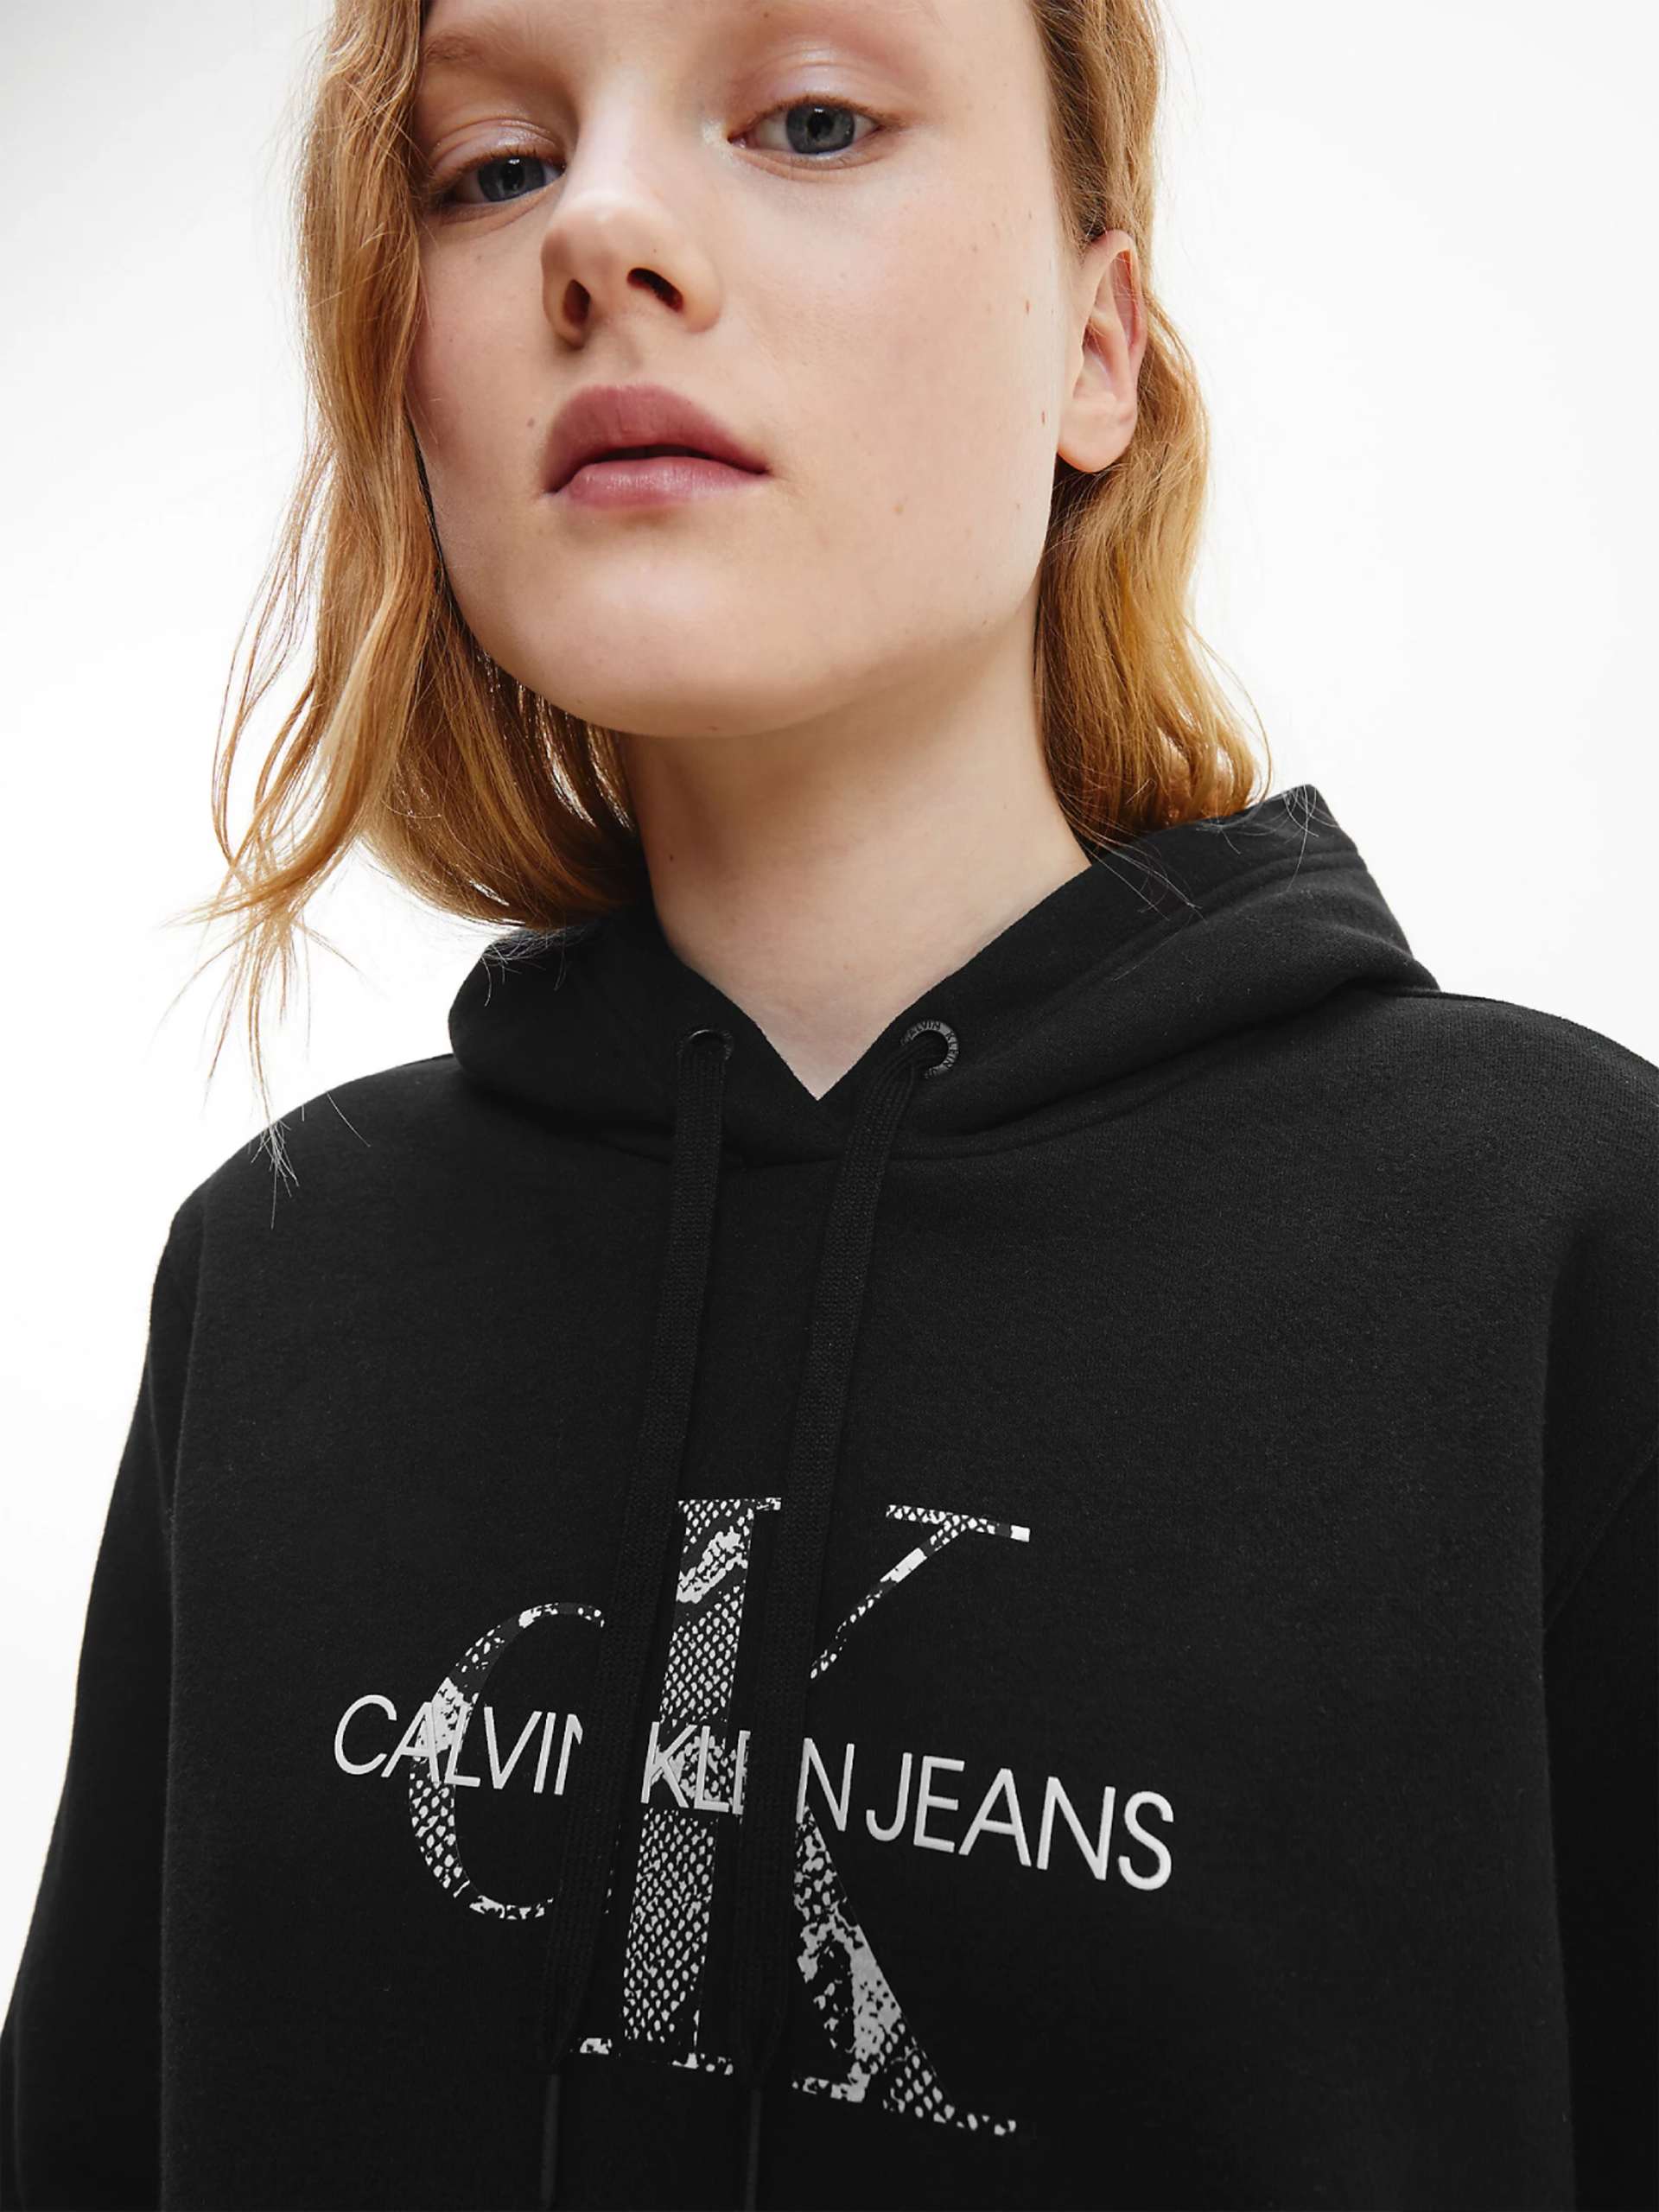 Calvin Klein dámská černá mikina - M (BEH)